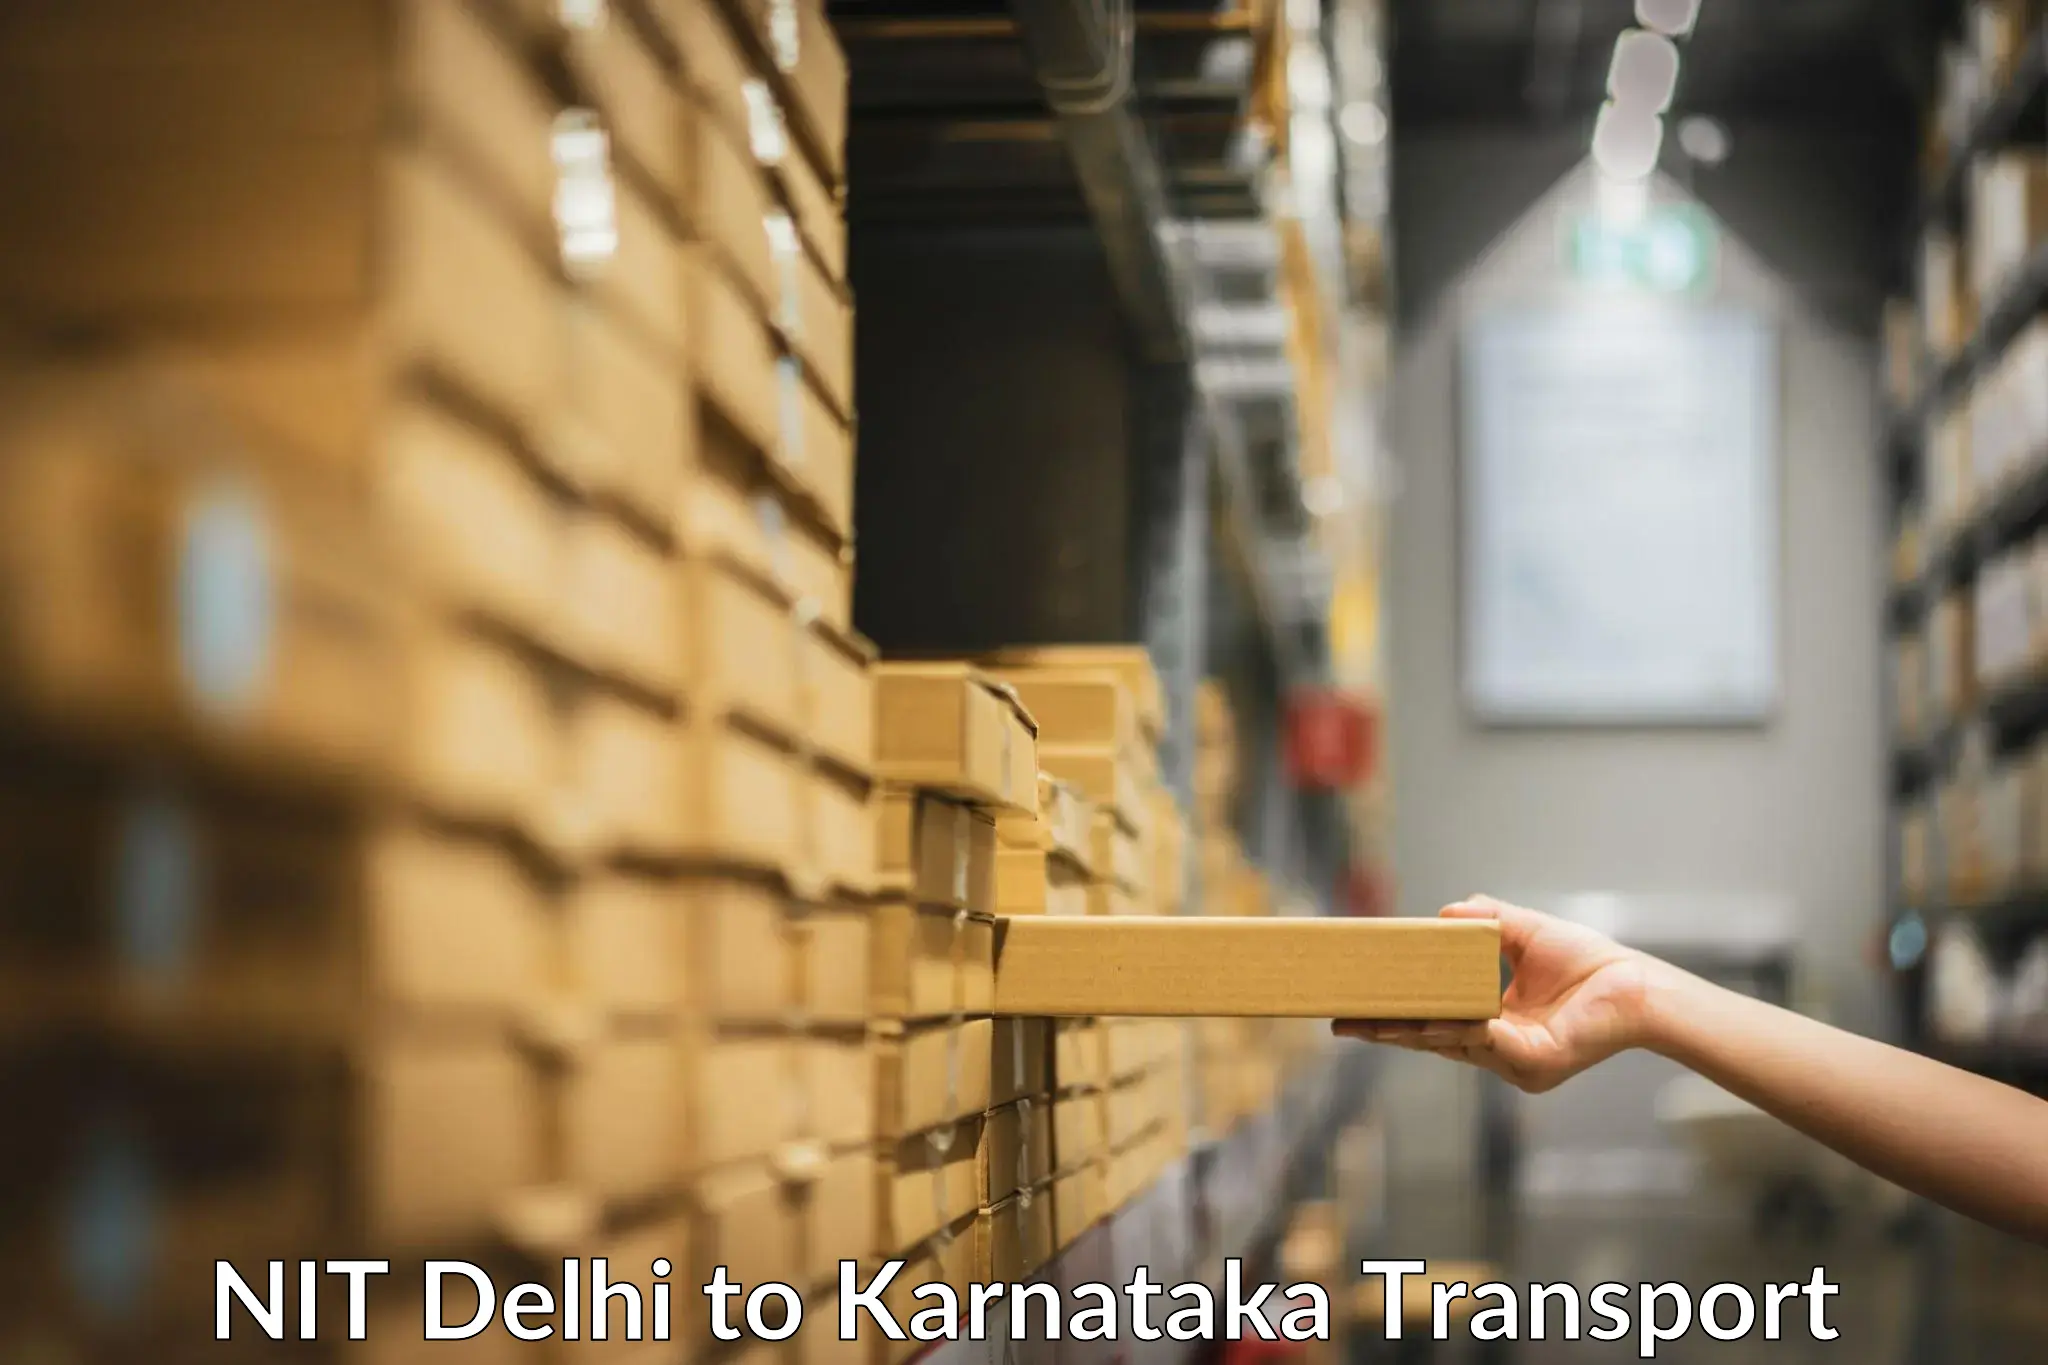 Daily parcel service transport NIT Delhi to Karnataka